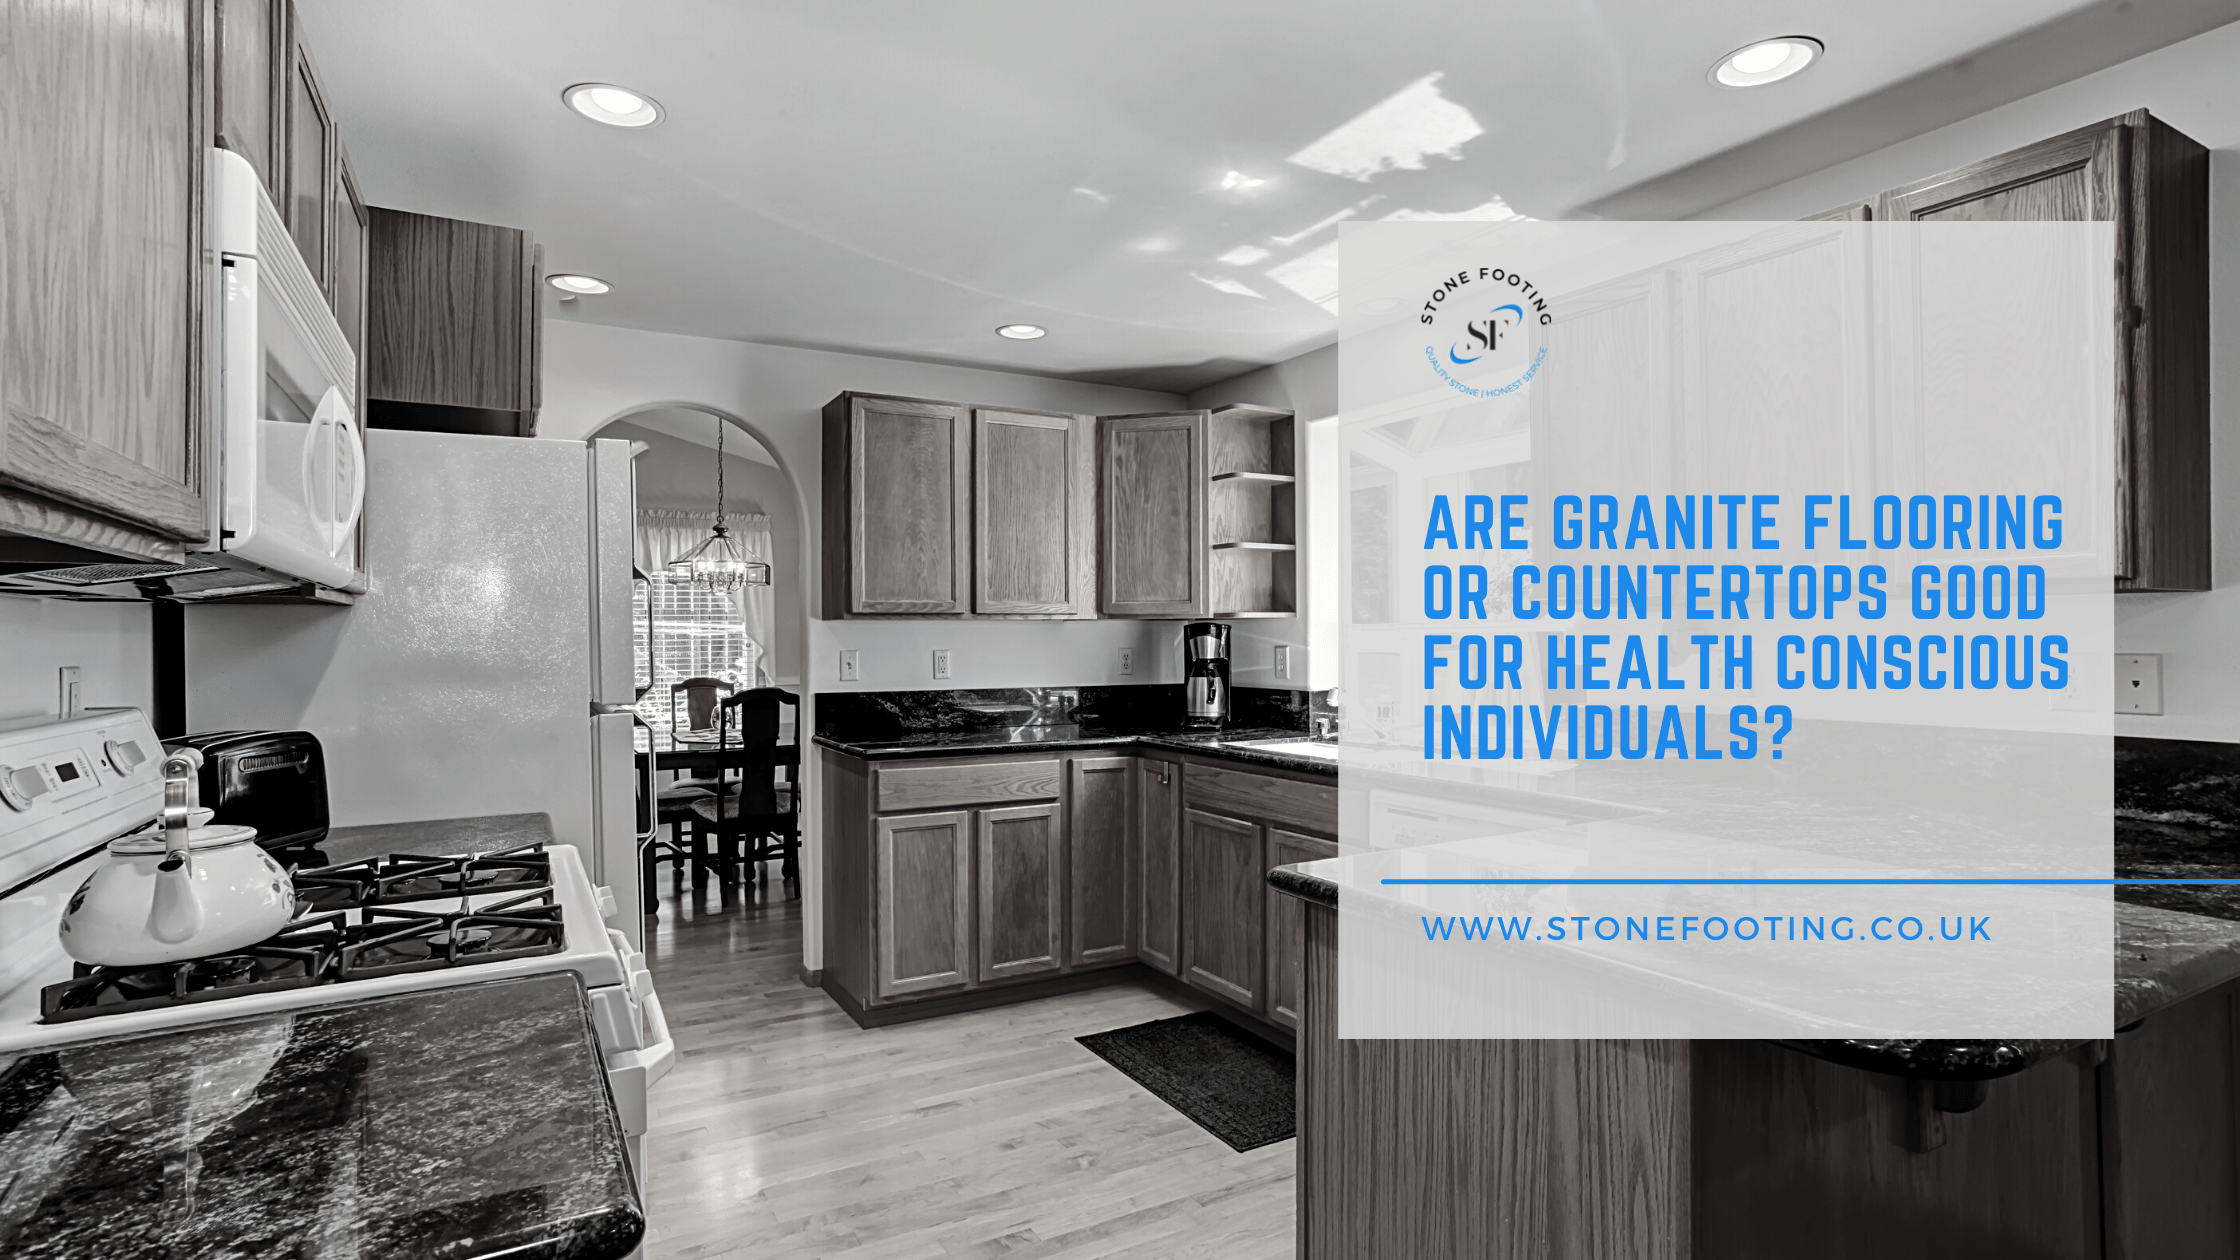 Are Granite Flooring Or Countertops Good For Health Conscious Individuals?